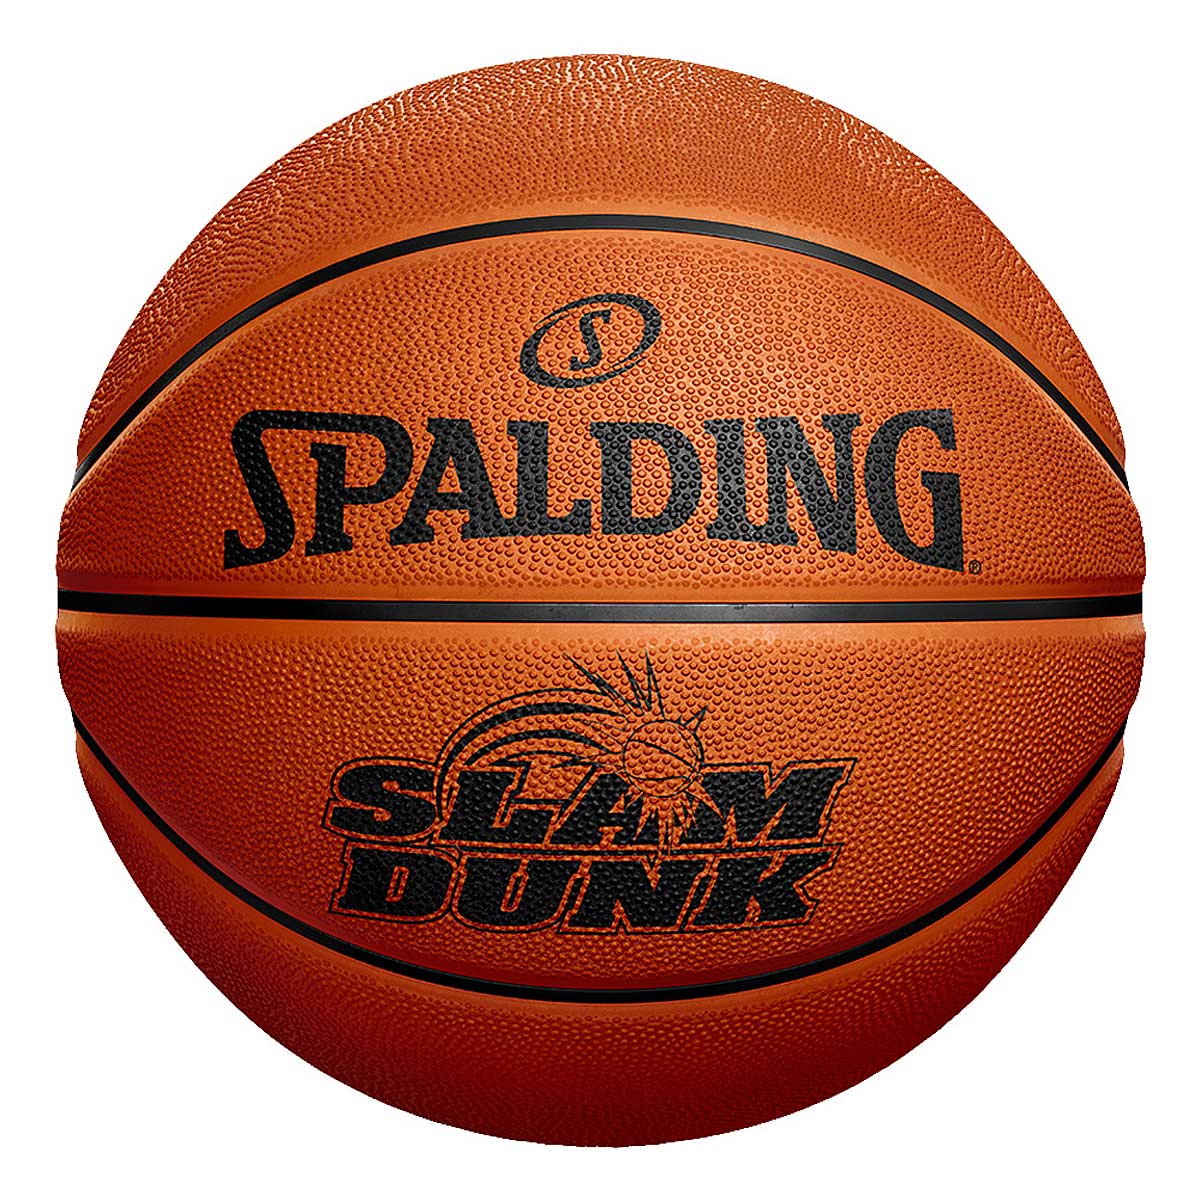 Spalding Slam Dunk Orange Sz7 Rubber Basketball, Orange 7